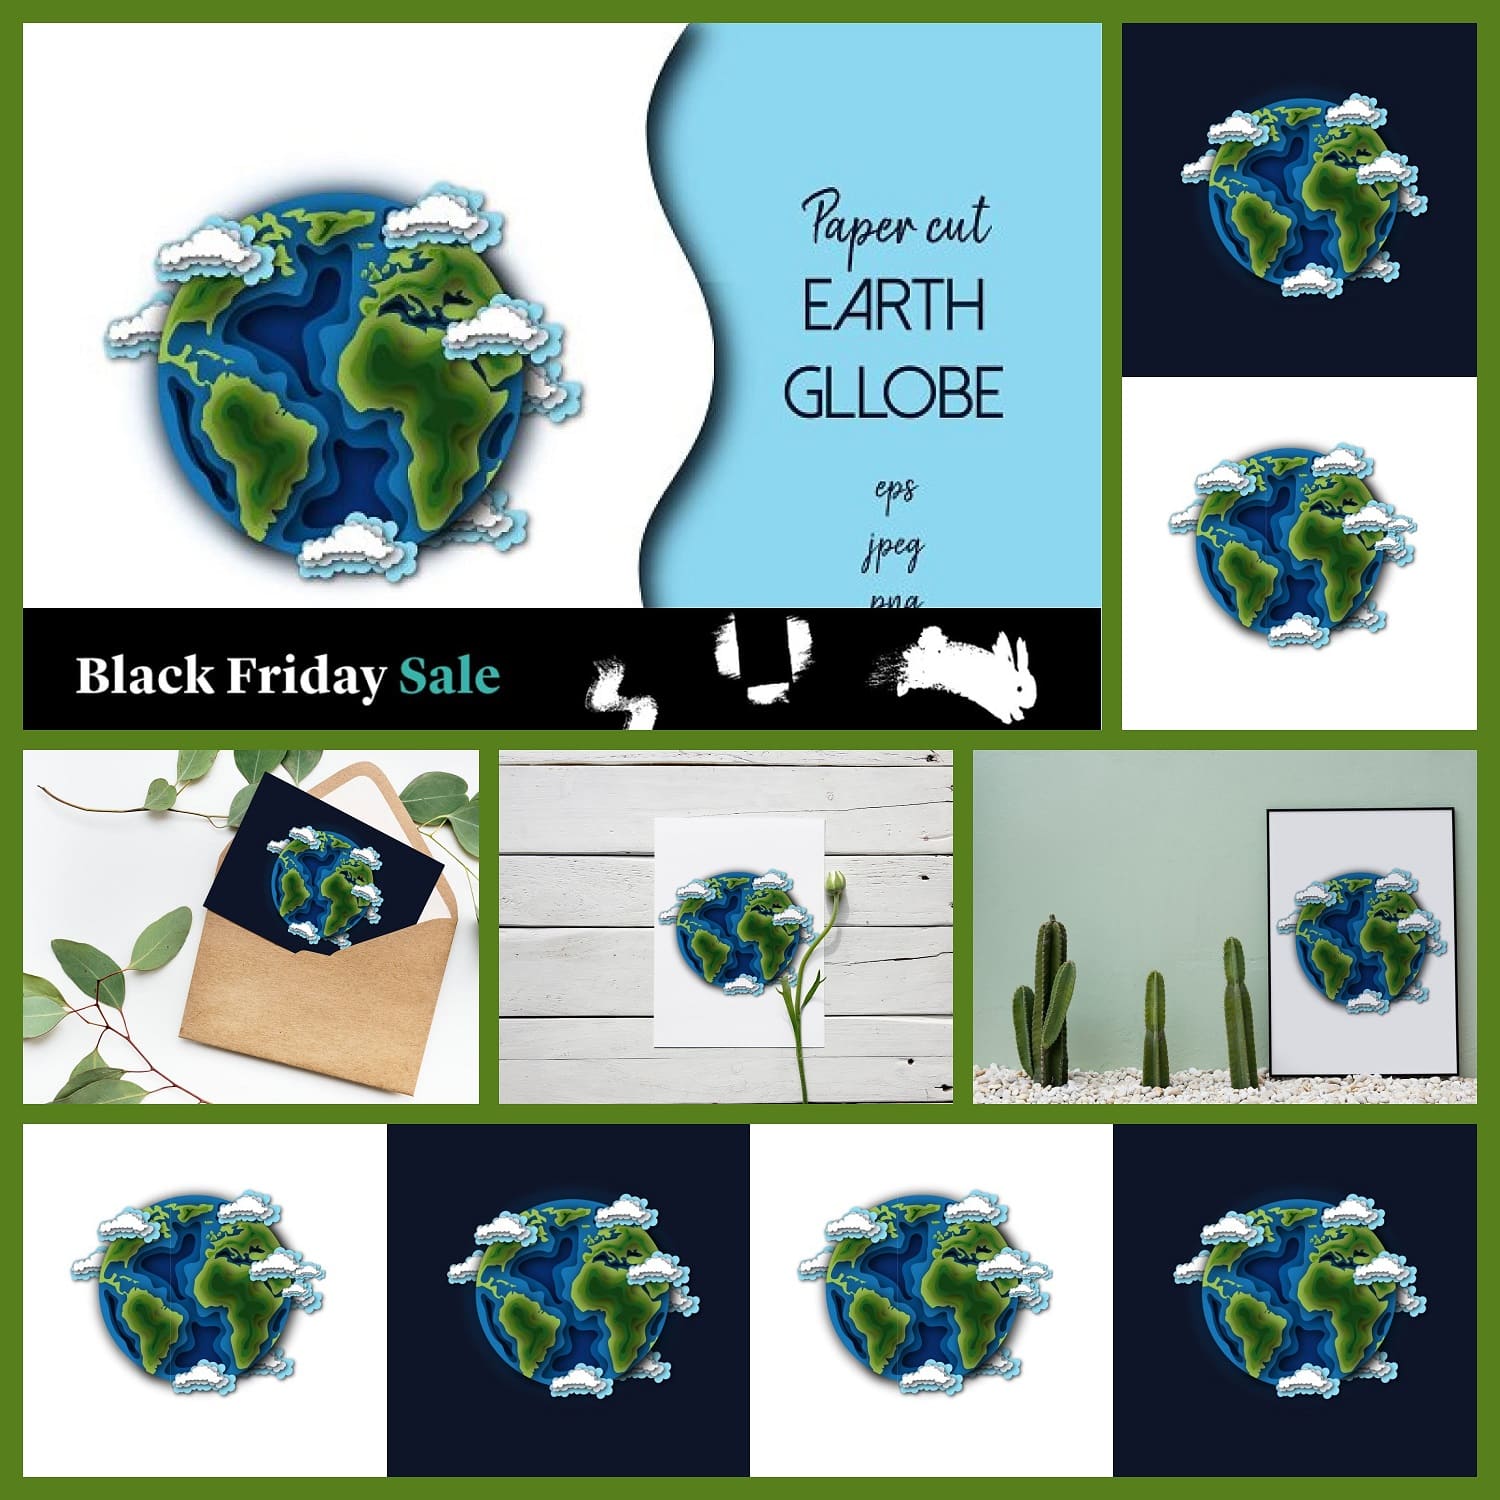 Black Friday sale of Paper Cut Earth Globe.